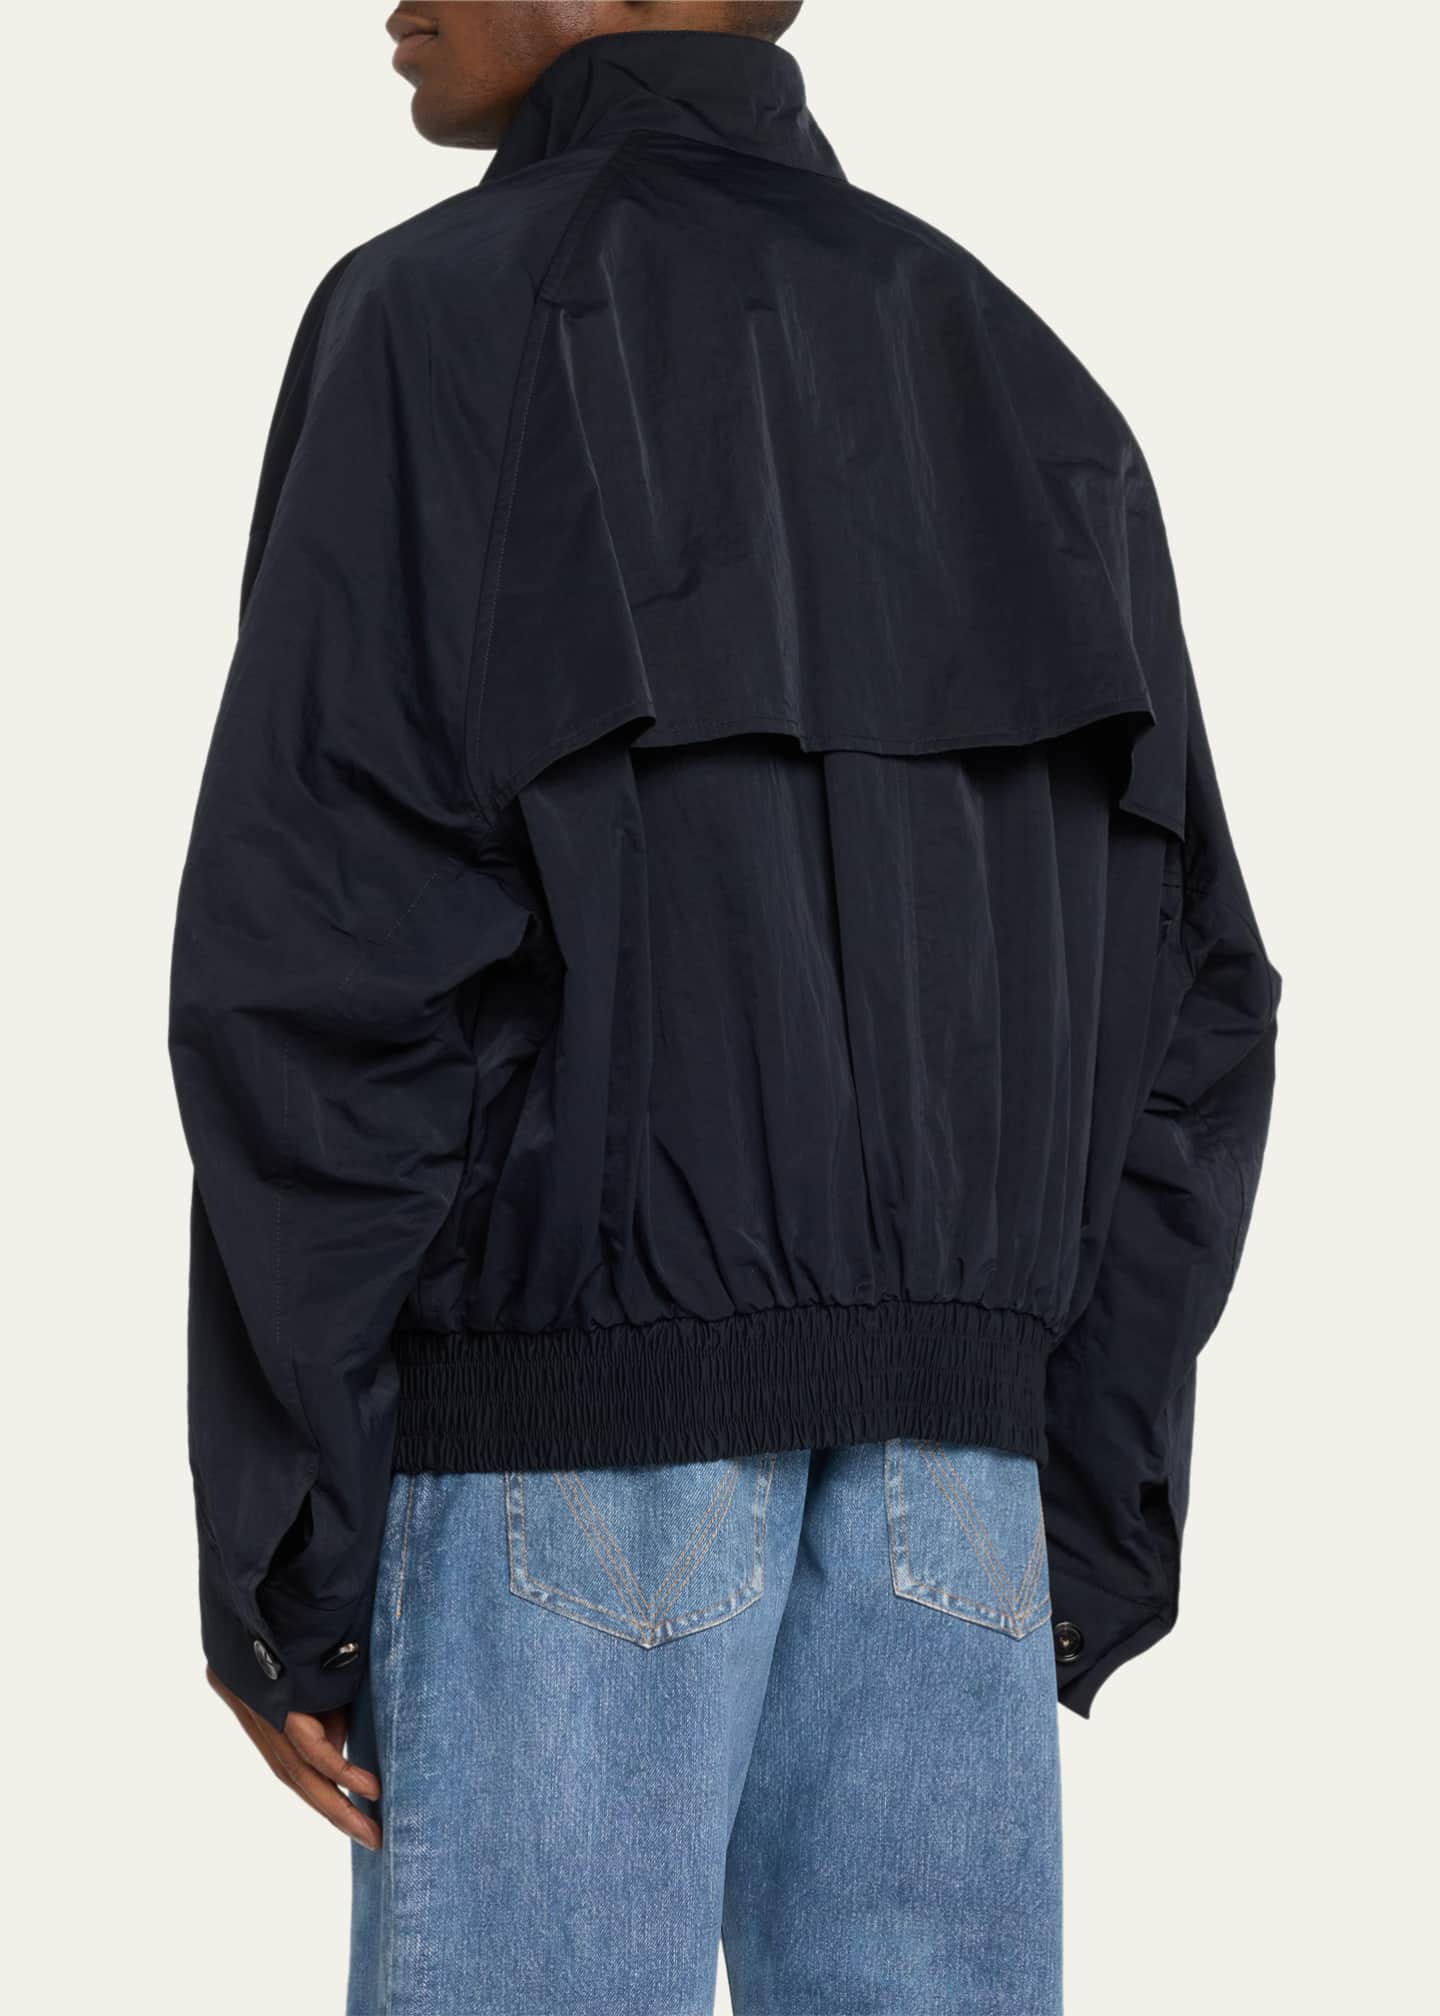 Bottega Veneta Men’s Technical Nylon Blouson Jacket